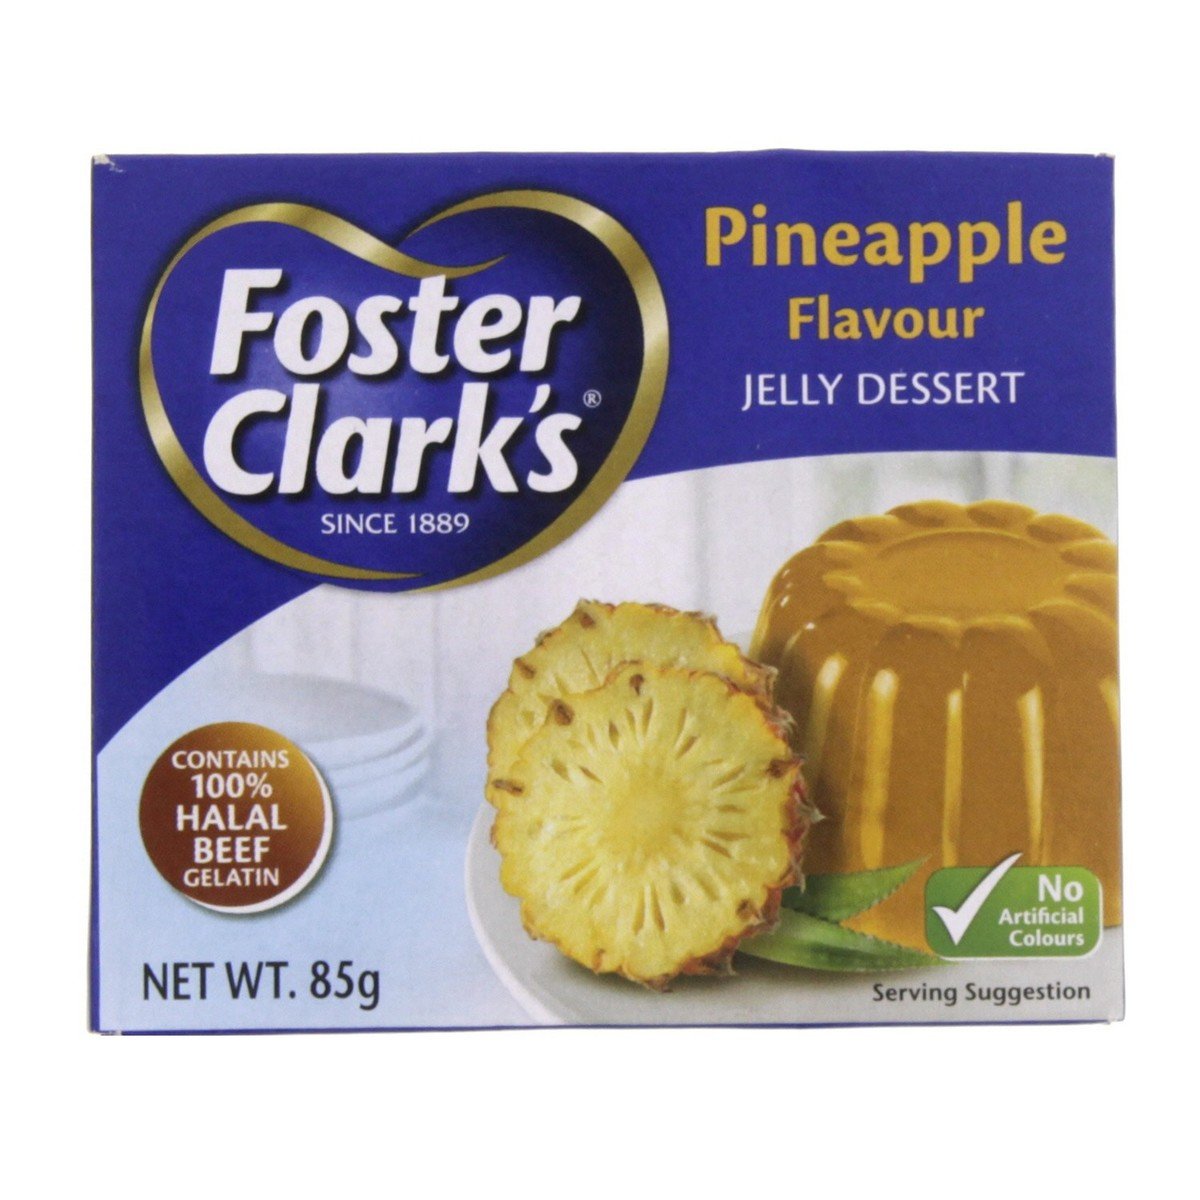 Foster Clark's Jelly Dessert Pineapple Flavour 12 x 85 g